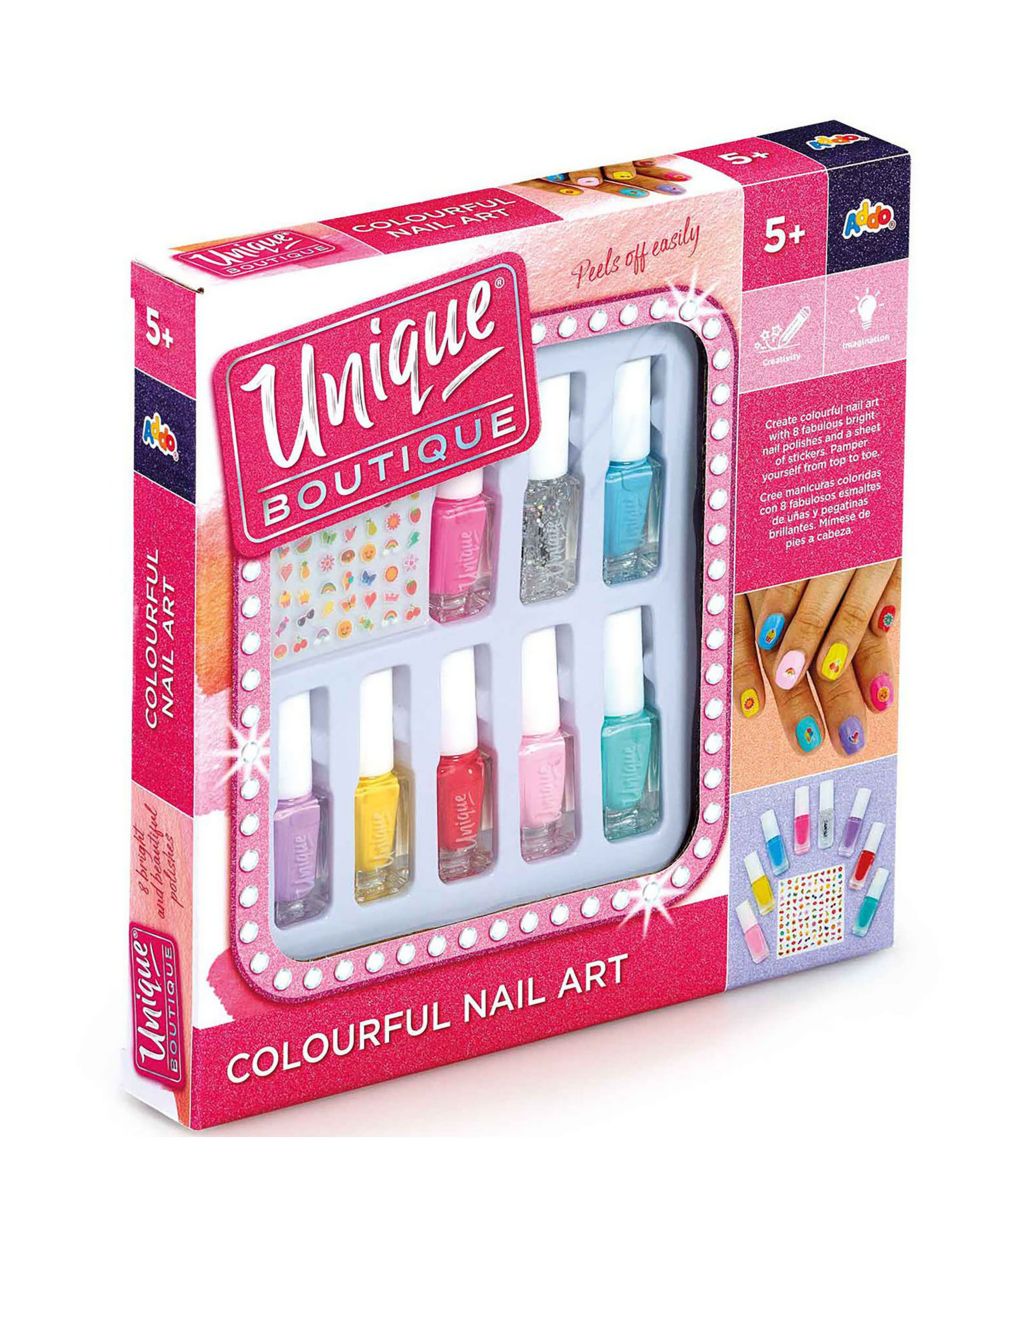 Colourful Nail Art Set (5+ Yrs)